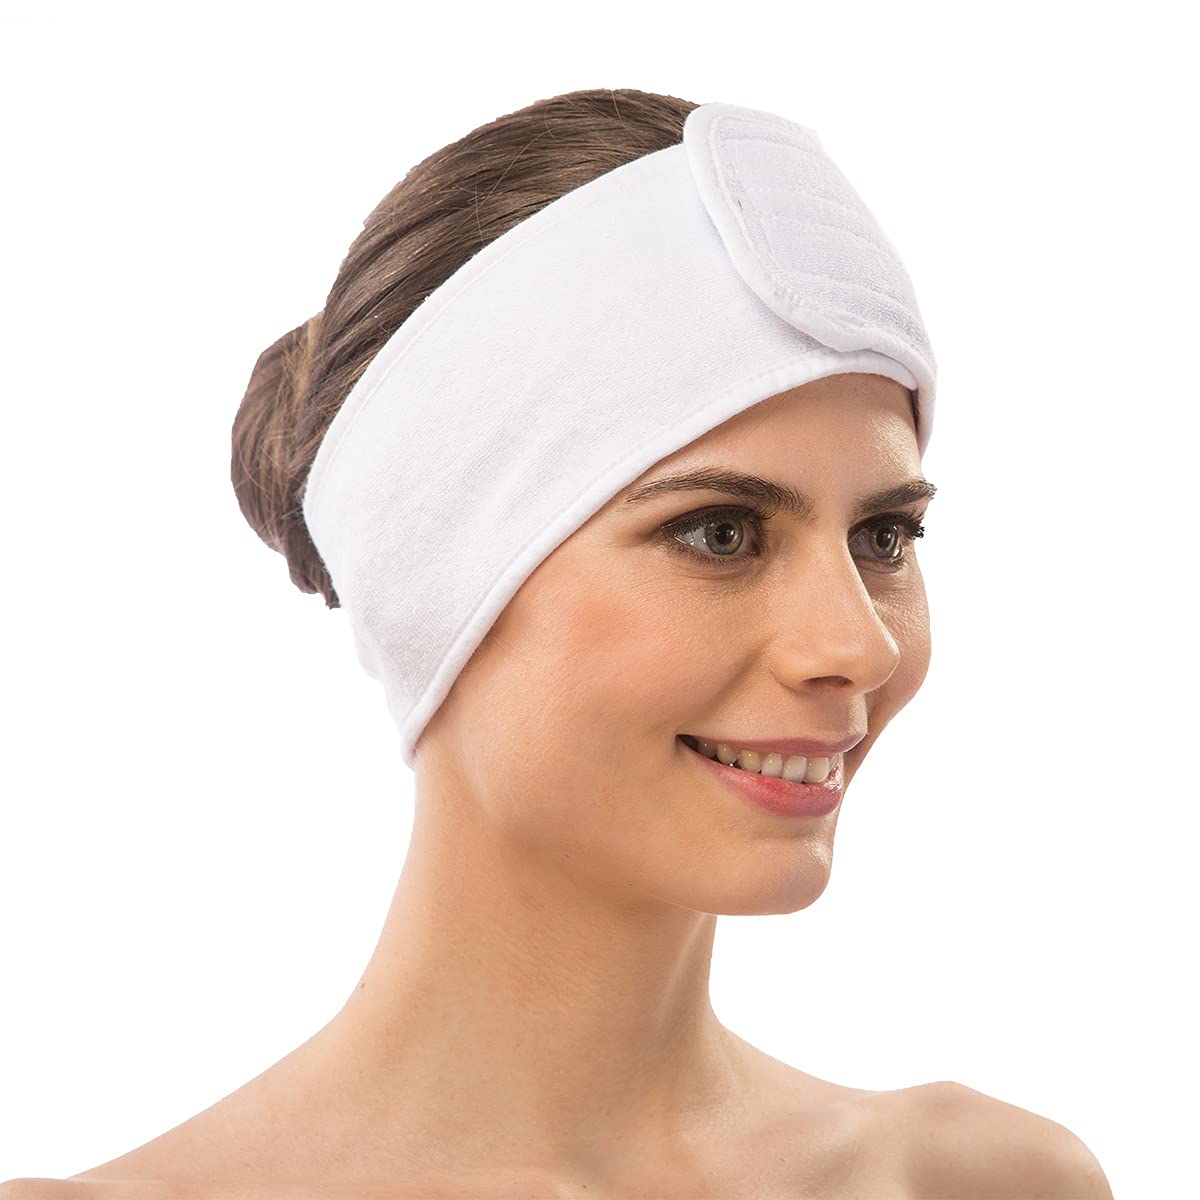 APPEARUS Spa Facial Headband Head Wrap Terry Cloth Headbands